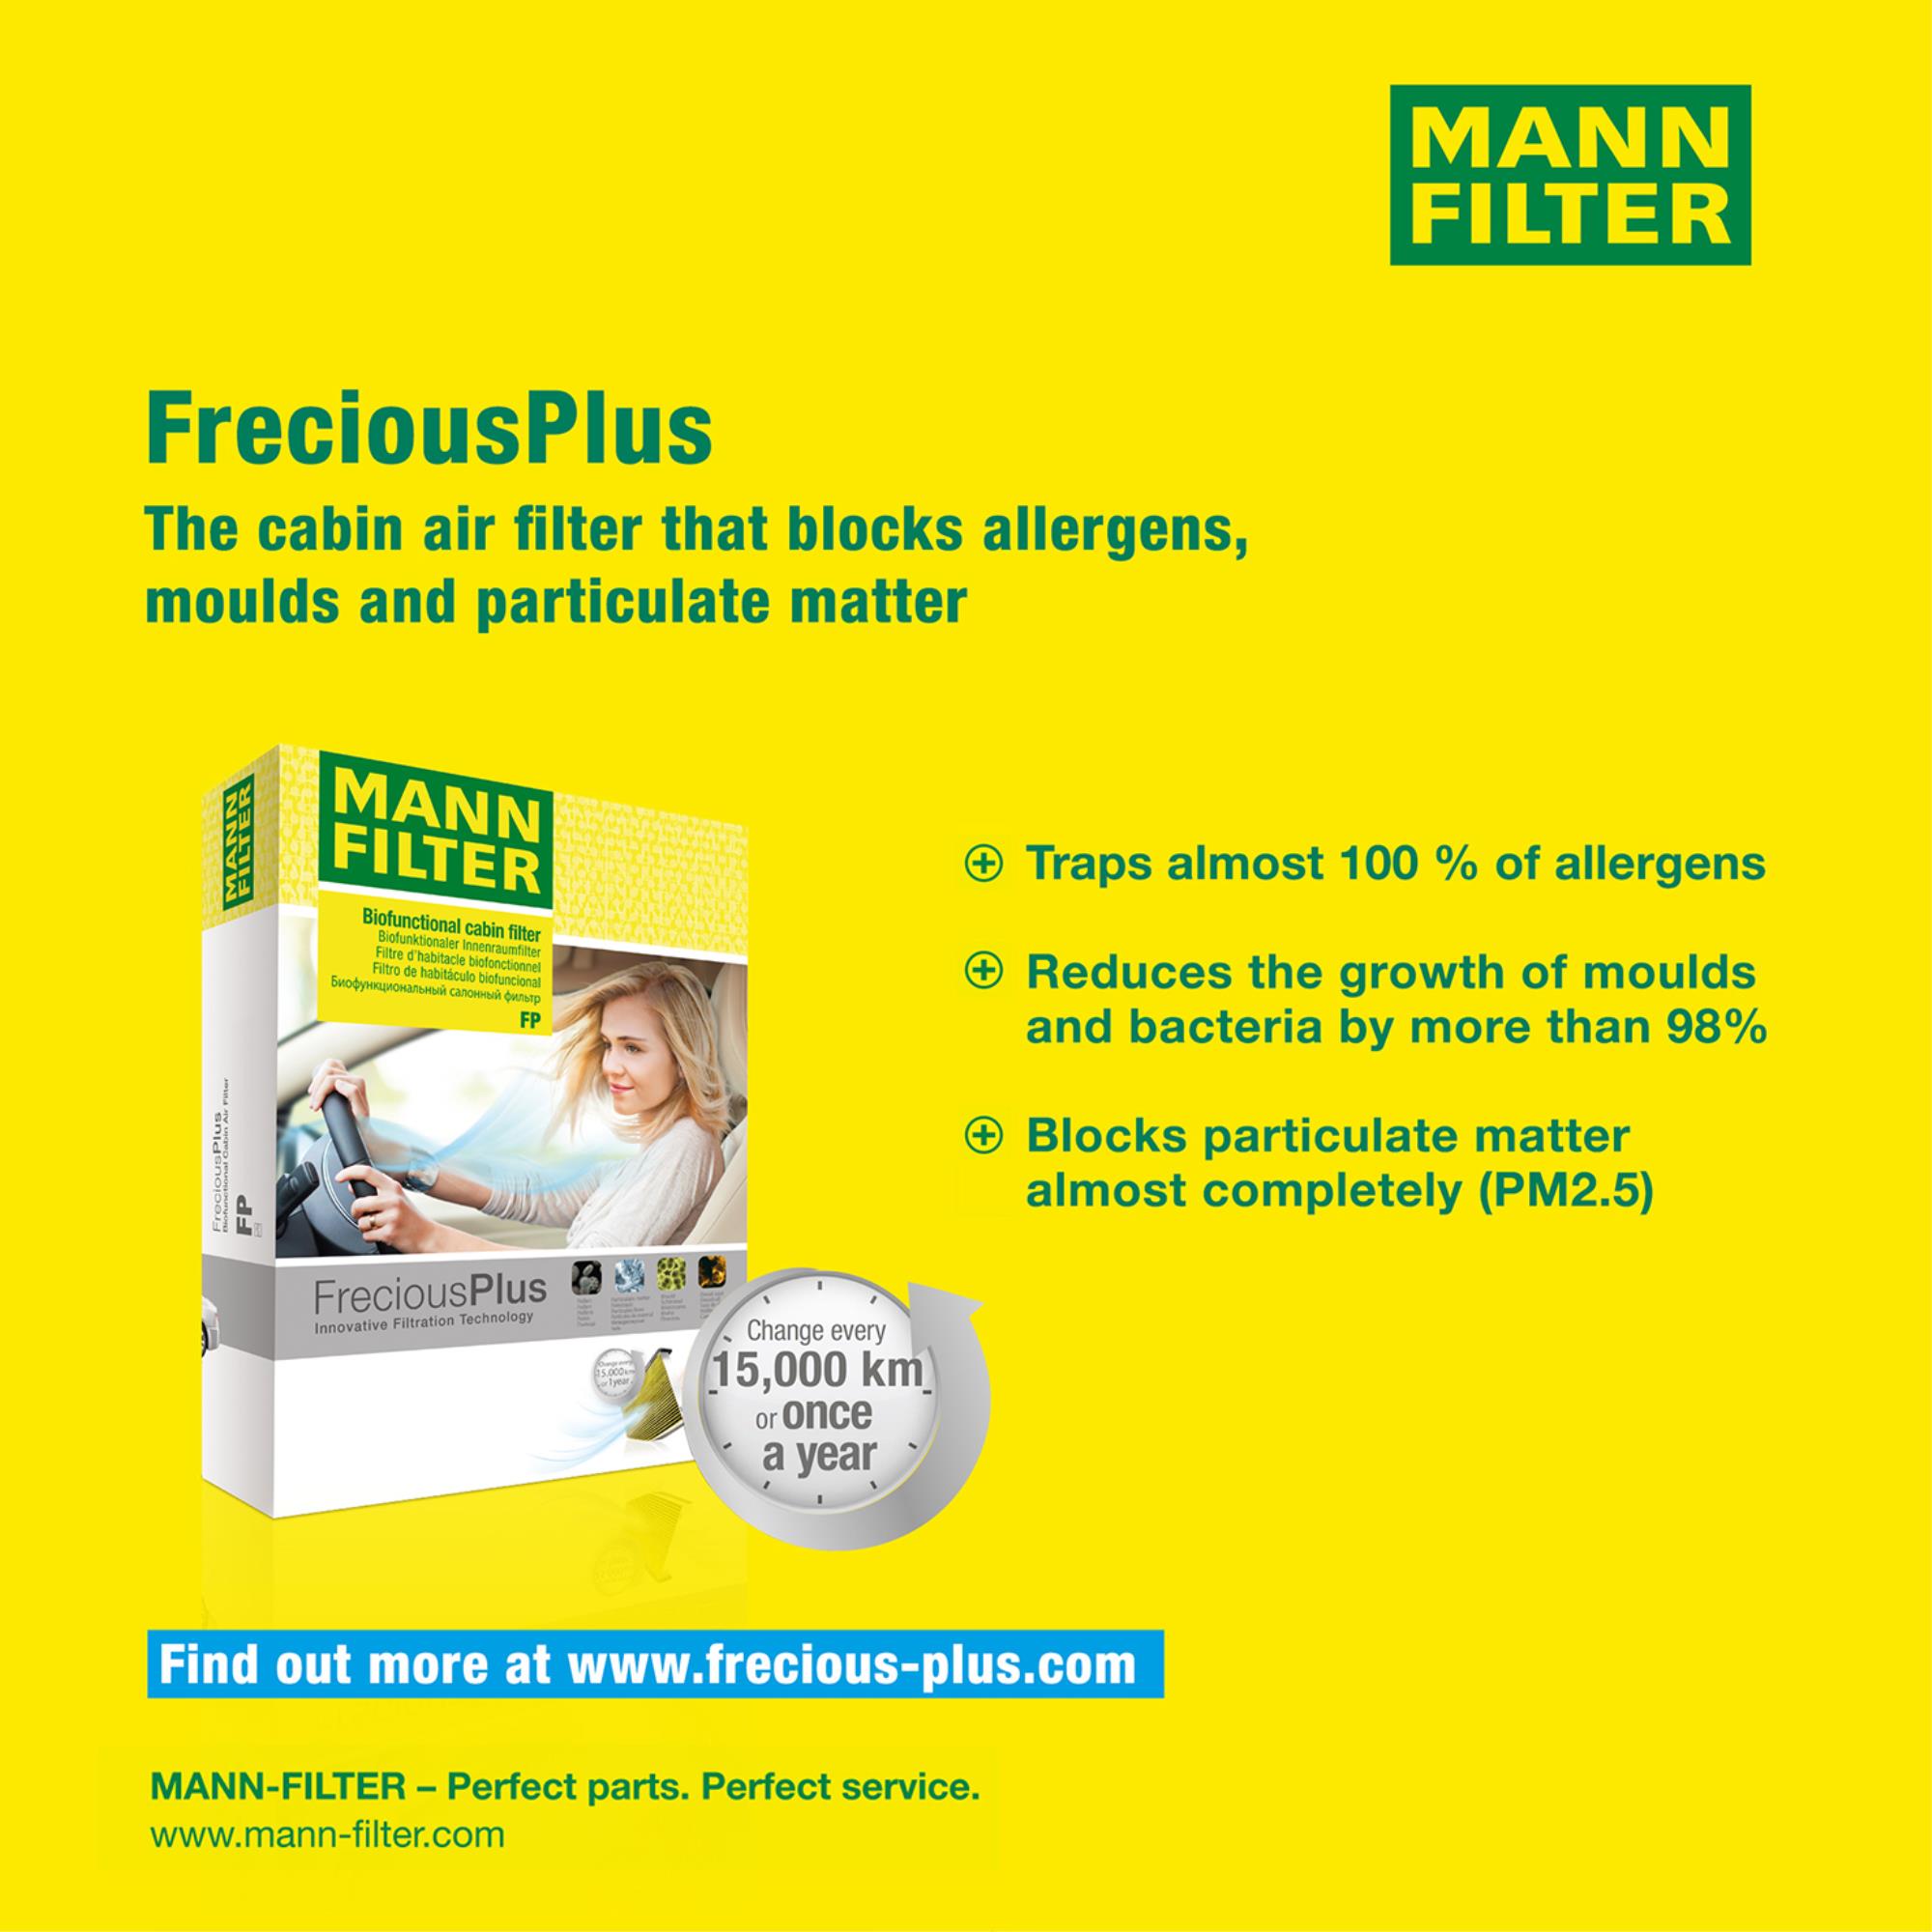 MANN-Filter Innenraumfilter Biofunctional für Allergiker FP 3337